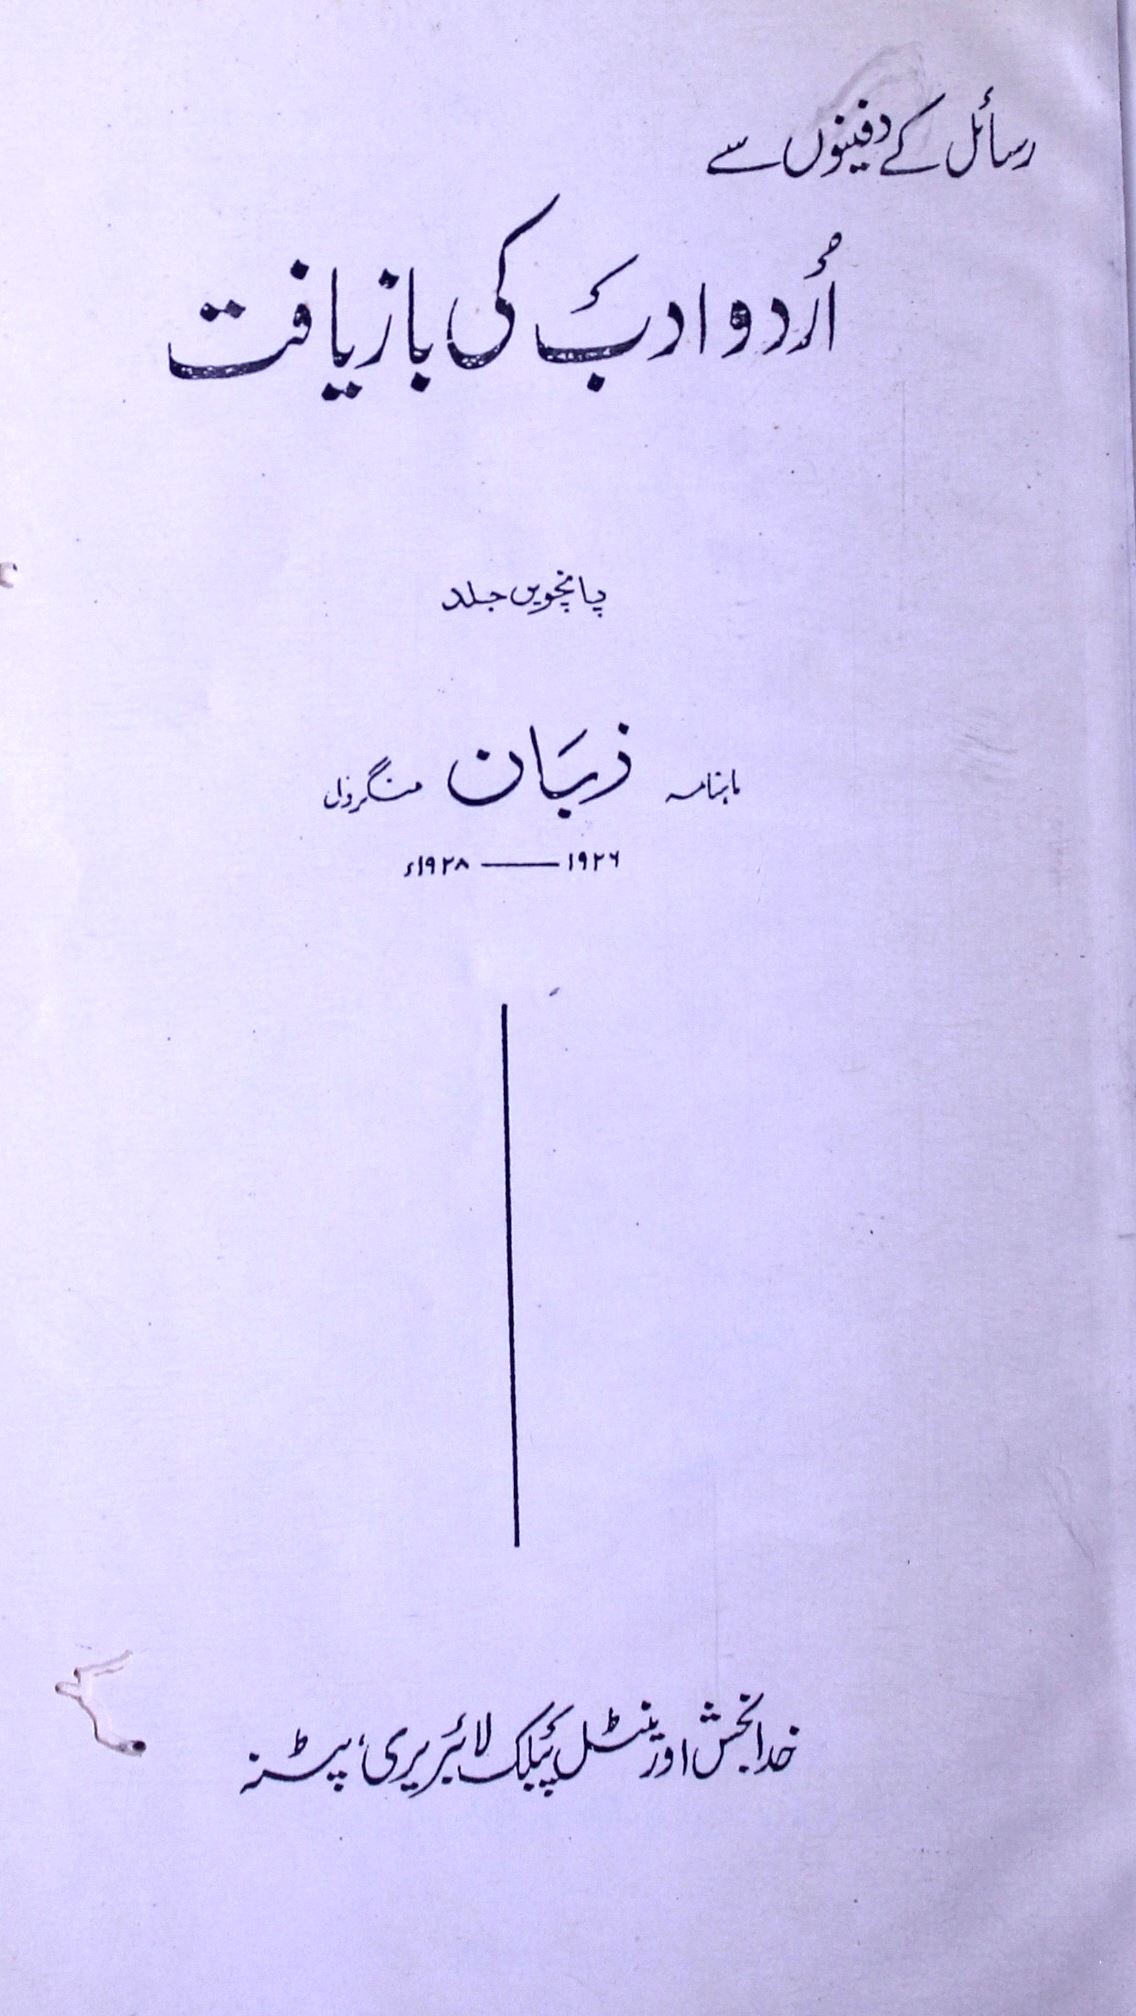 Zaban Jild 1 No. 1 July 1926-Shumara Number-000